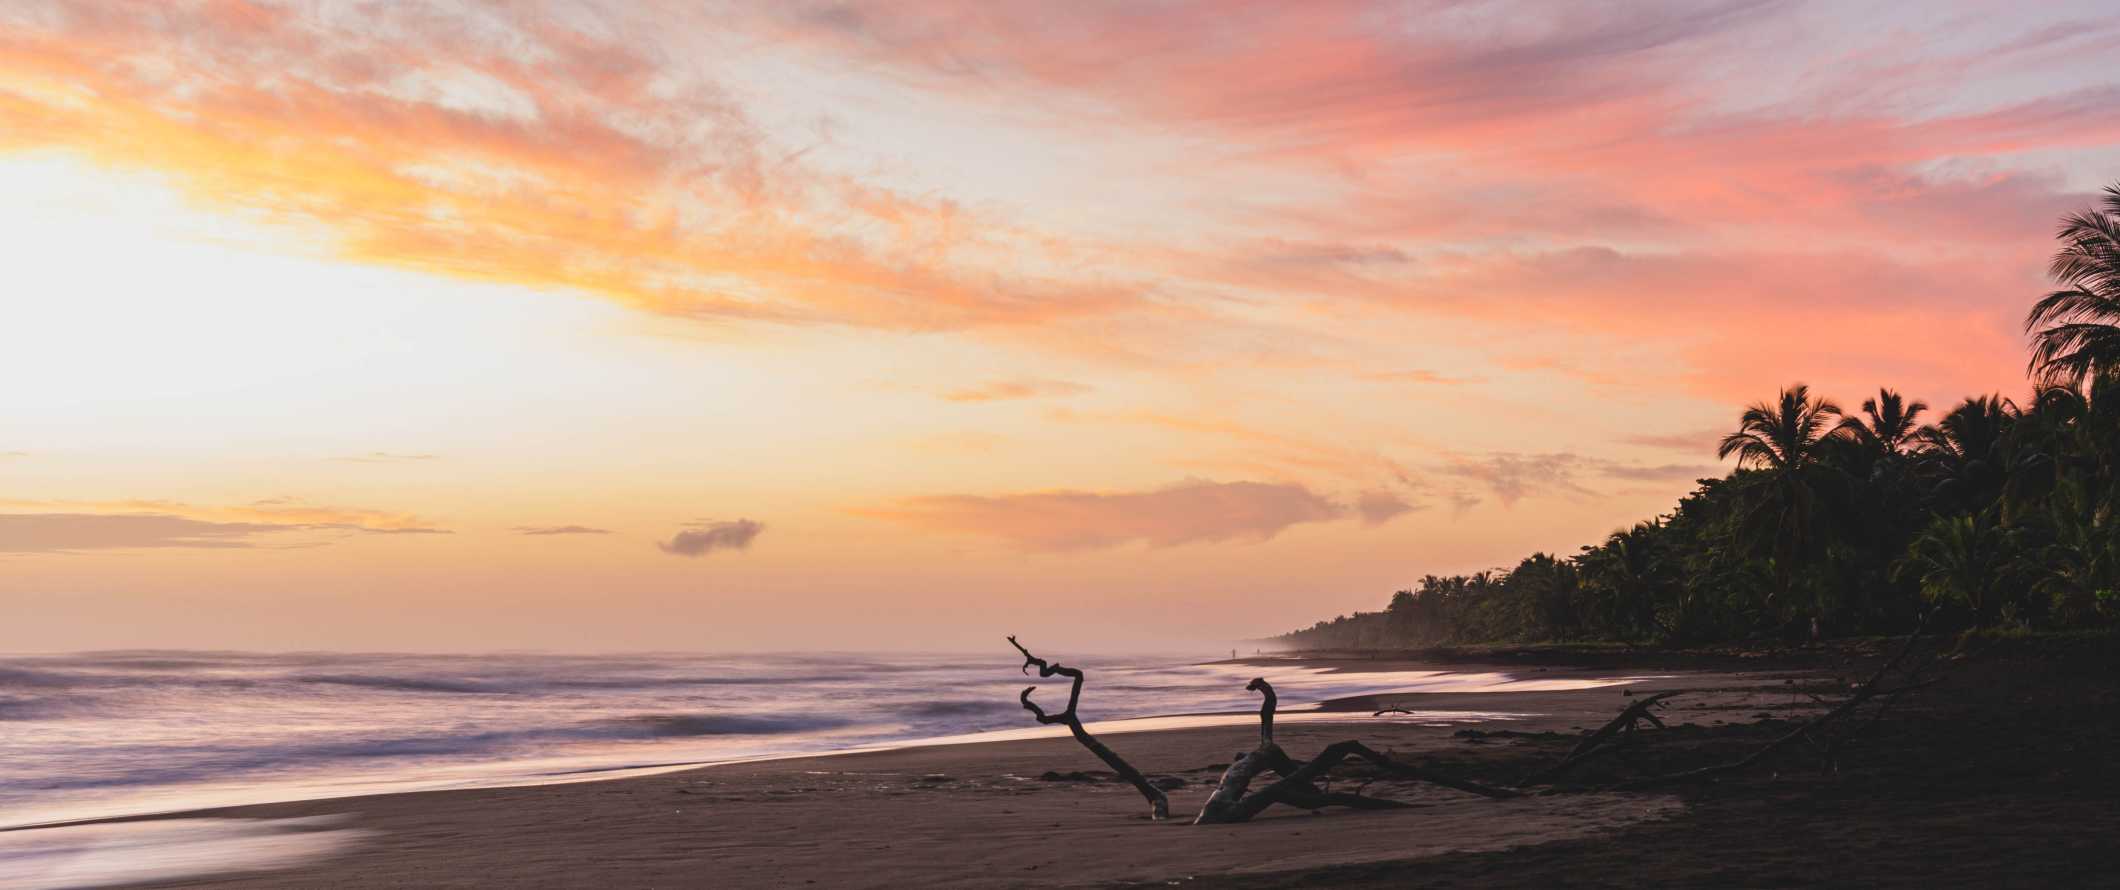 A colorful sunset along the beach in Tortuguero, Costa Rica